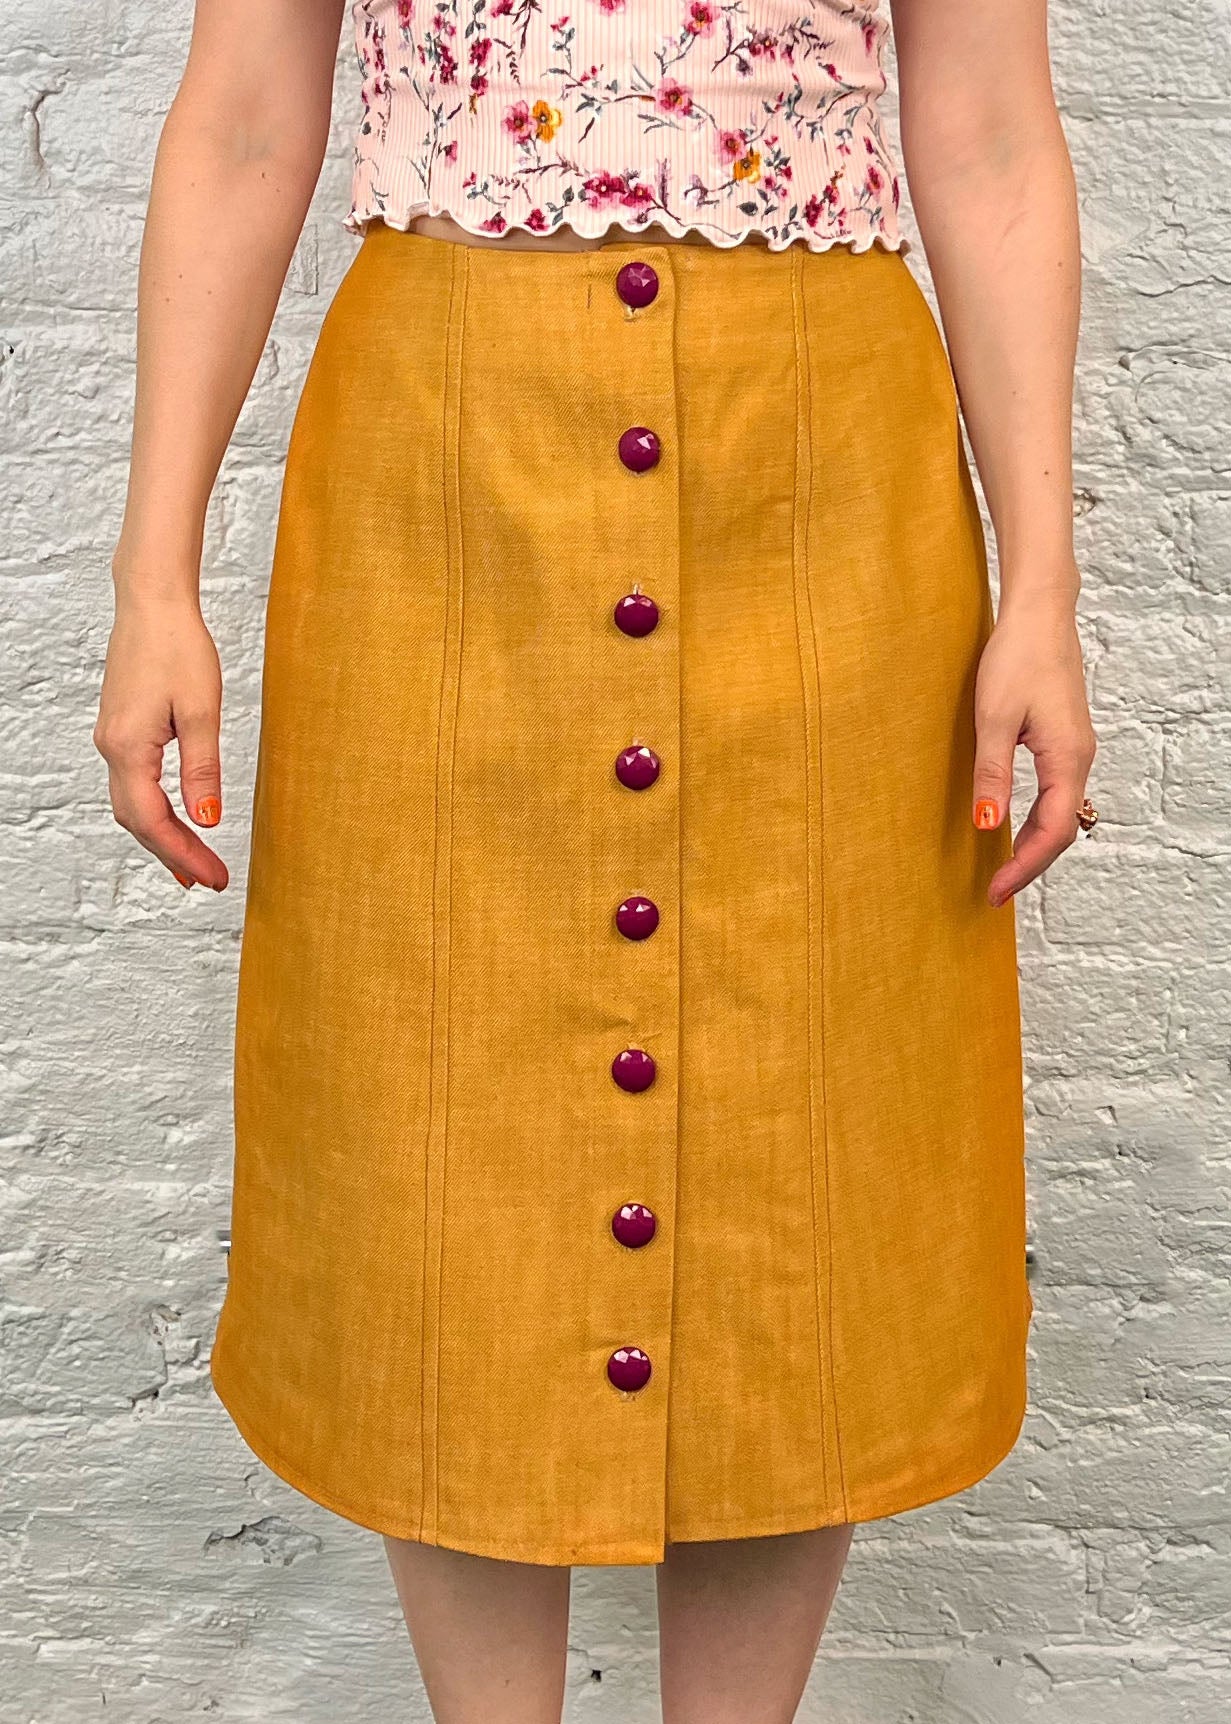 Button up skirt PDF Sewing Pattern